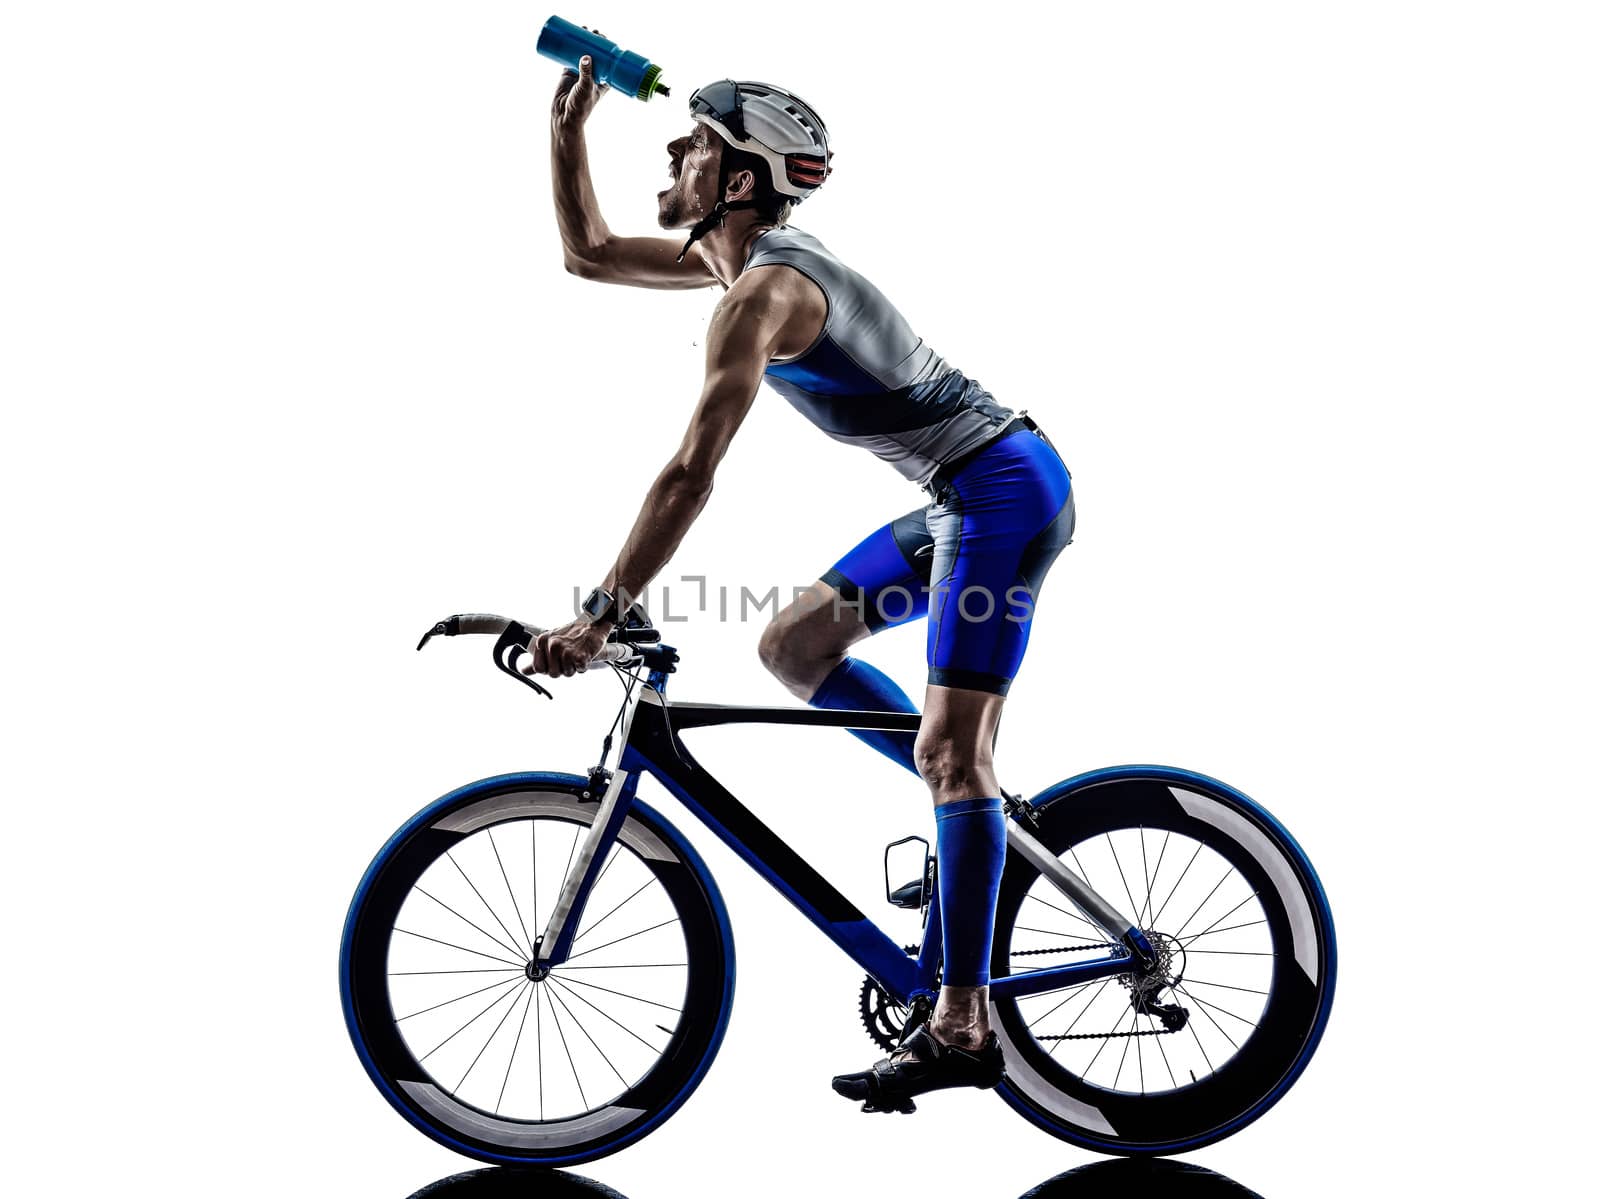 man triathlon iron man athlete bikers cyclists bicycling biking drinking in silhouettes on white background